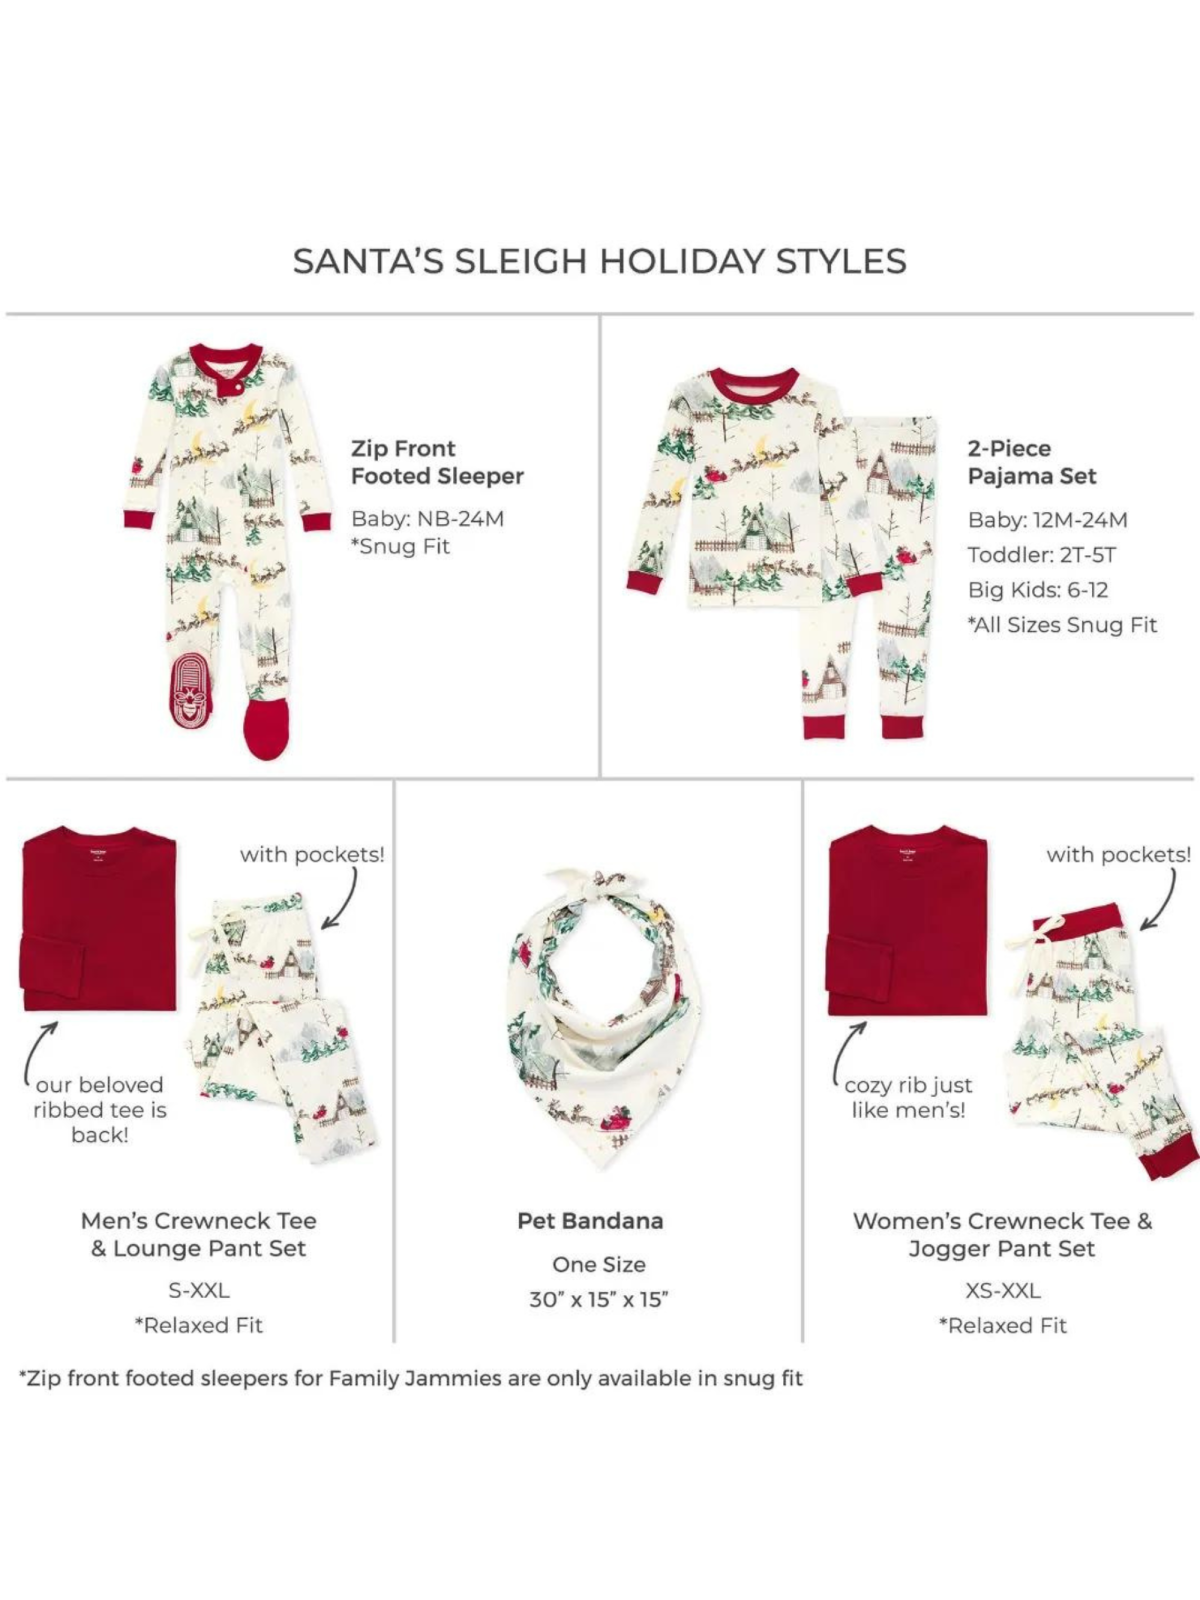 Adult Women's Tee & Jogger Pajama Set, Santa's Sleigh